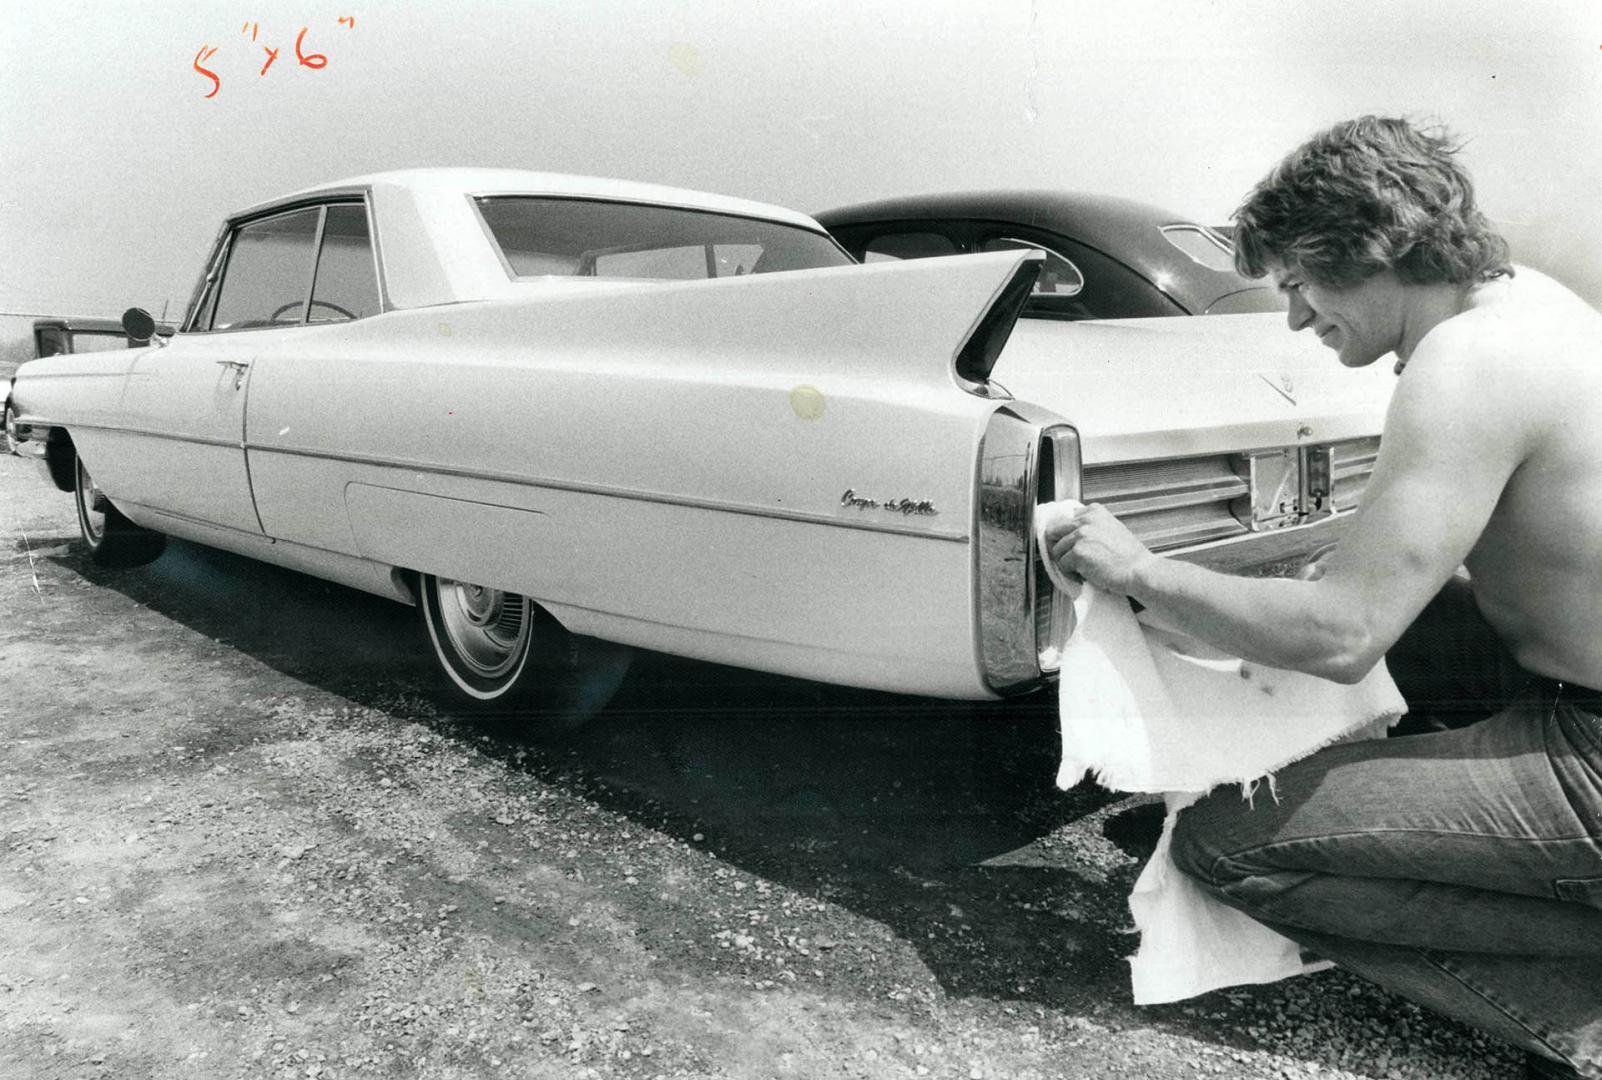 Frank Austin polishes 1963 Cadillac coupe